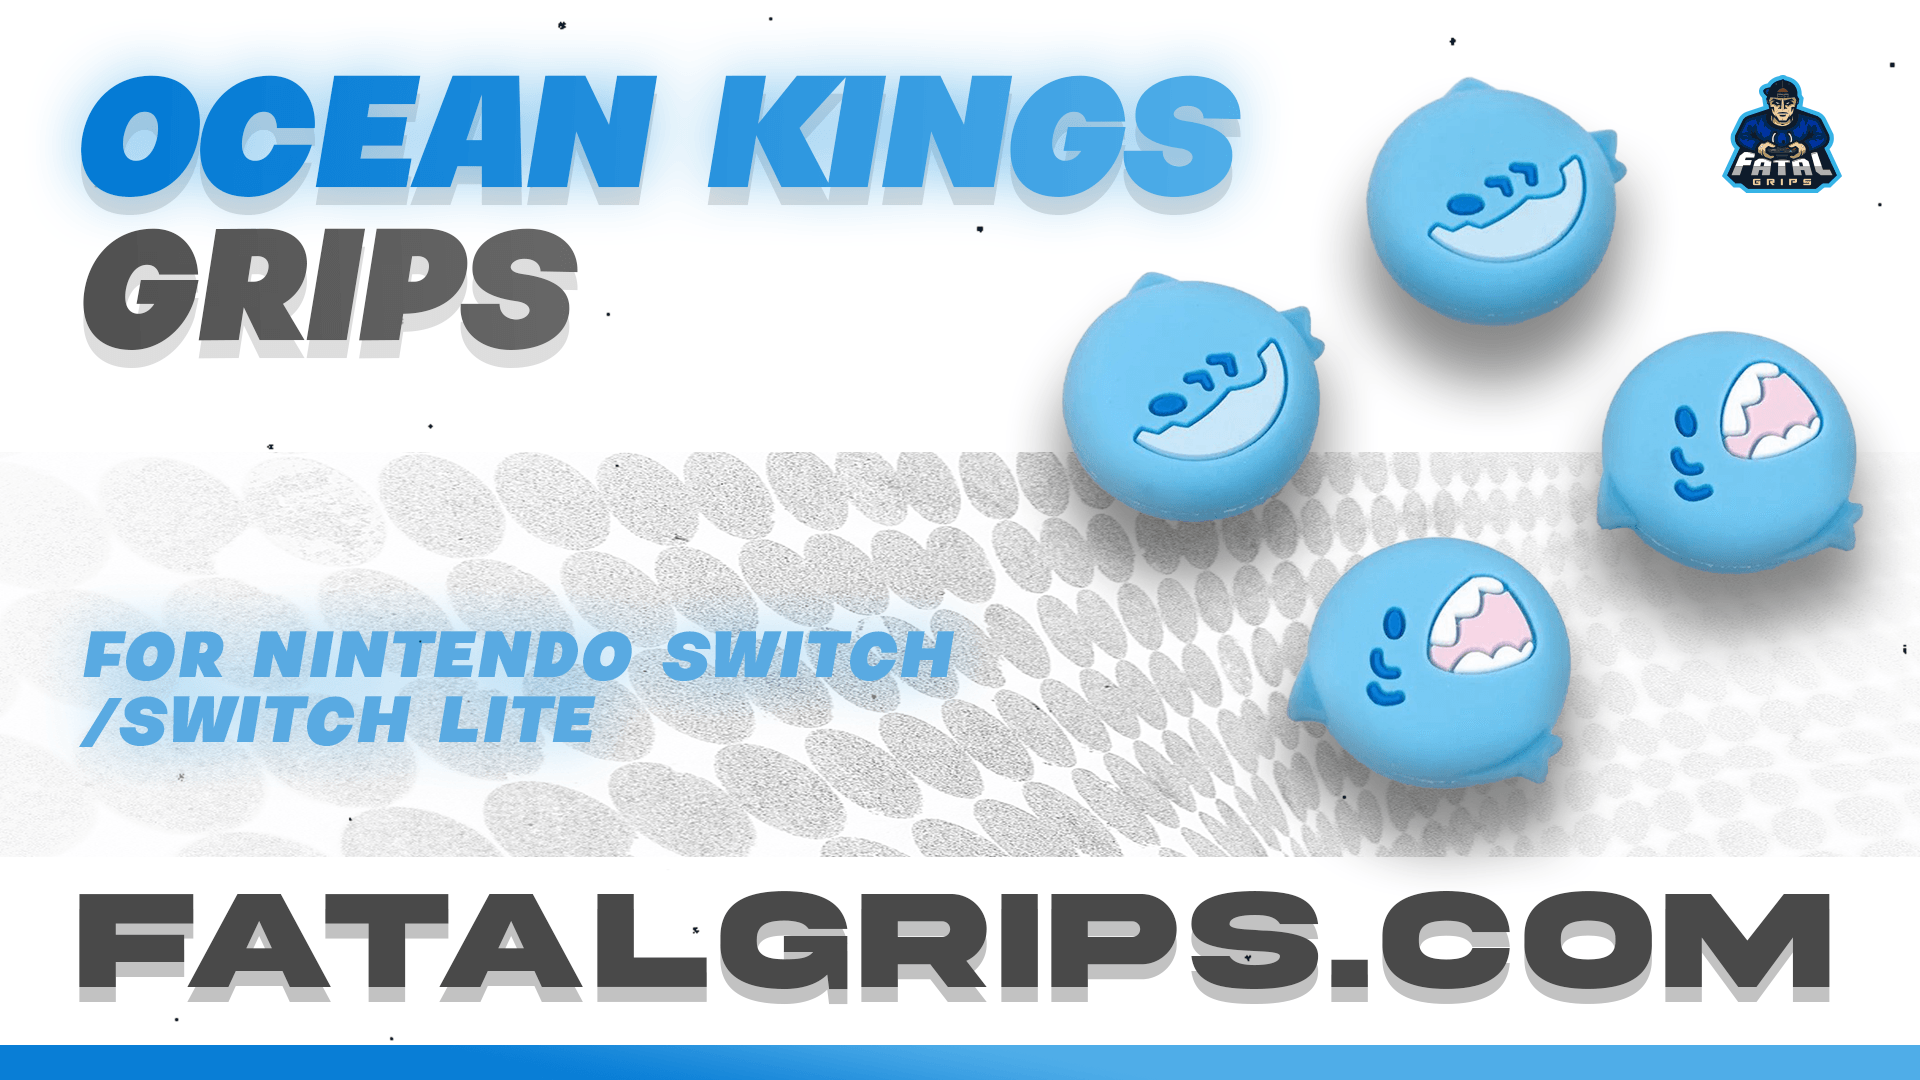 Ocean Kings Grips - Fatal Grips